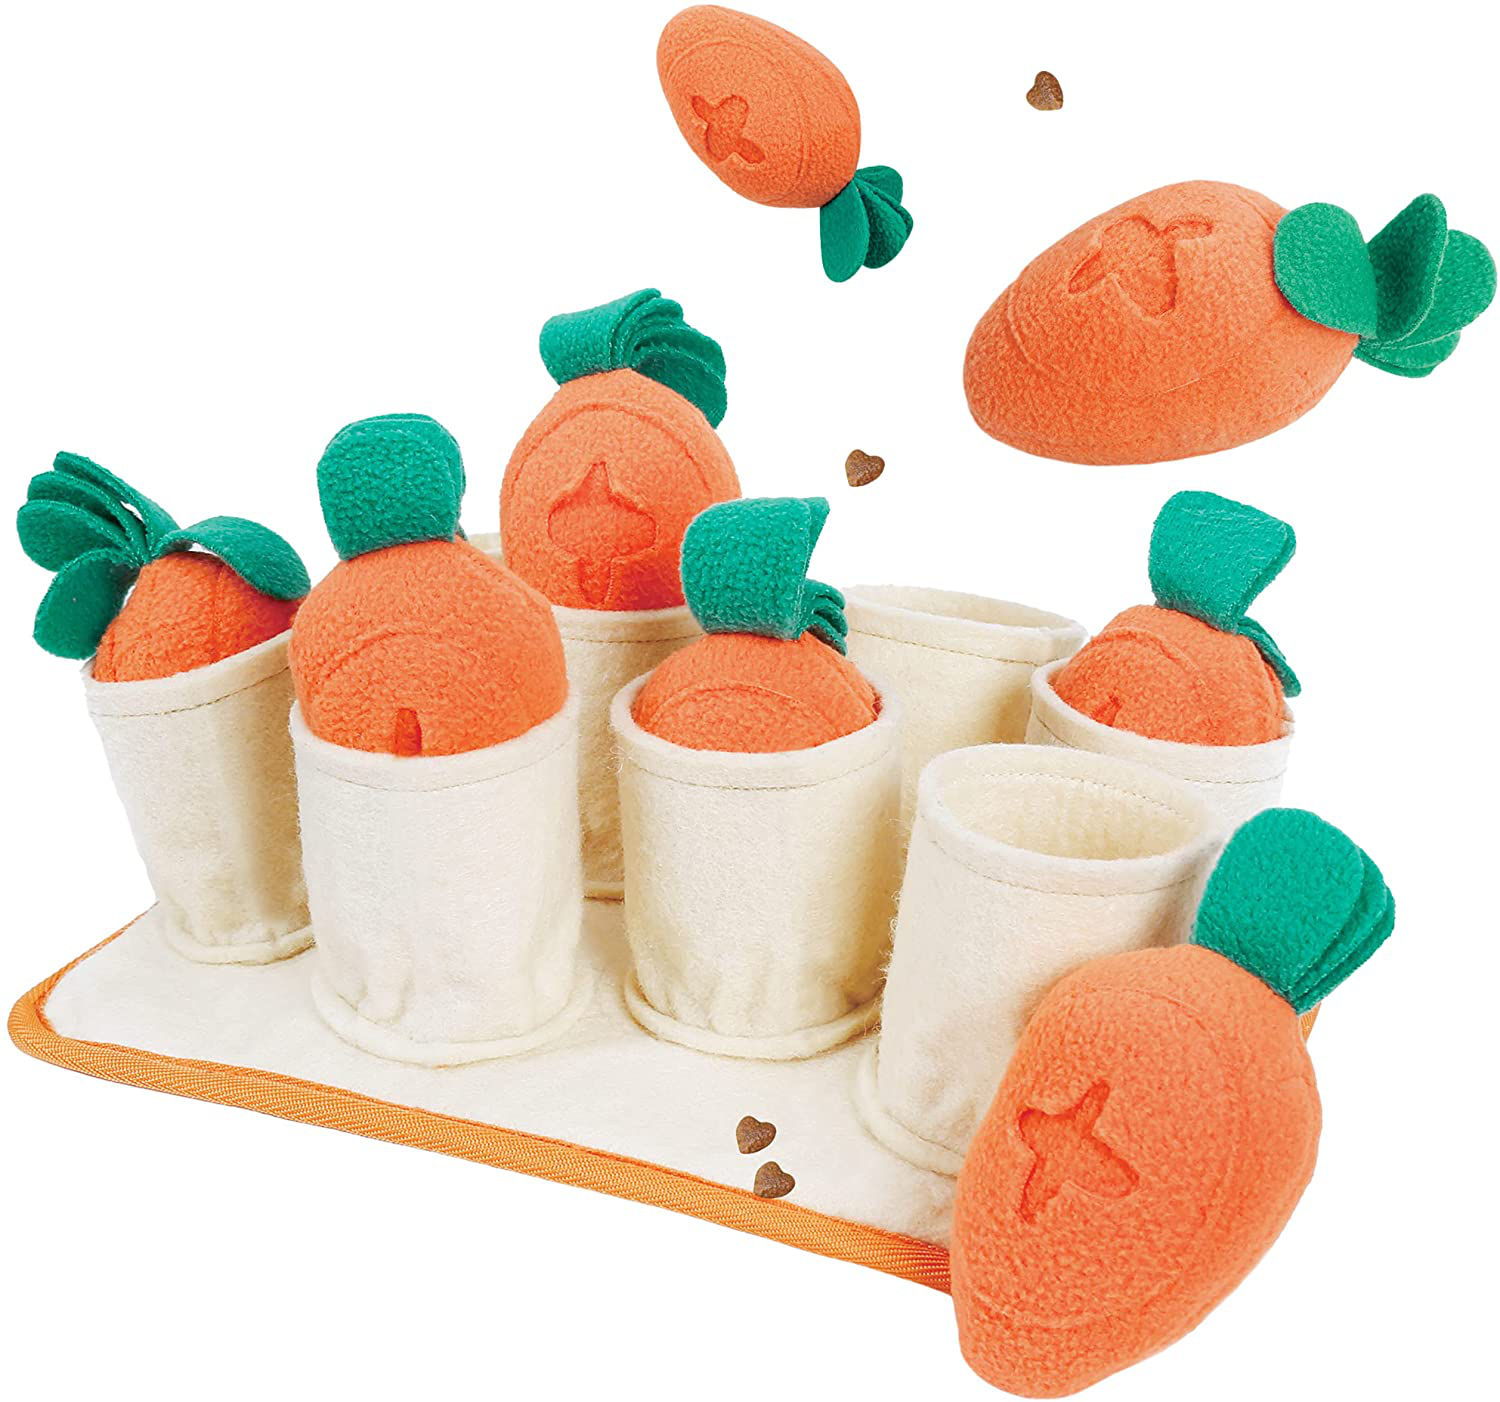 FOSSA Dog Snuffle Mat, Pet Food Feeding Mat with 8 Carrots Plush Treat Puzzle Toys